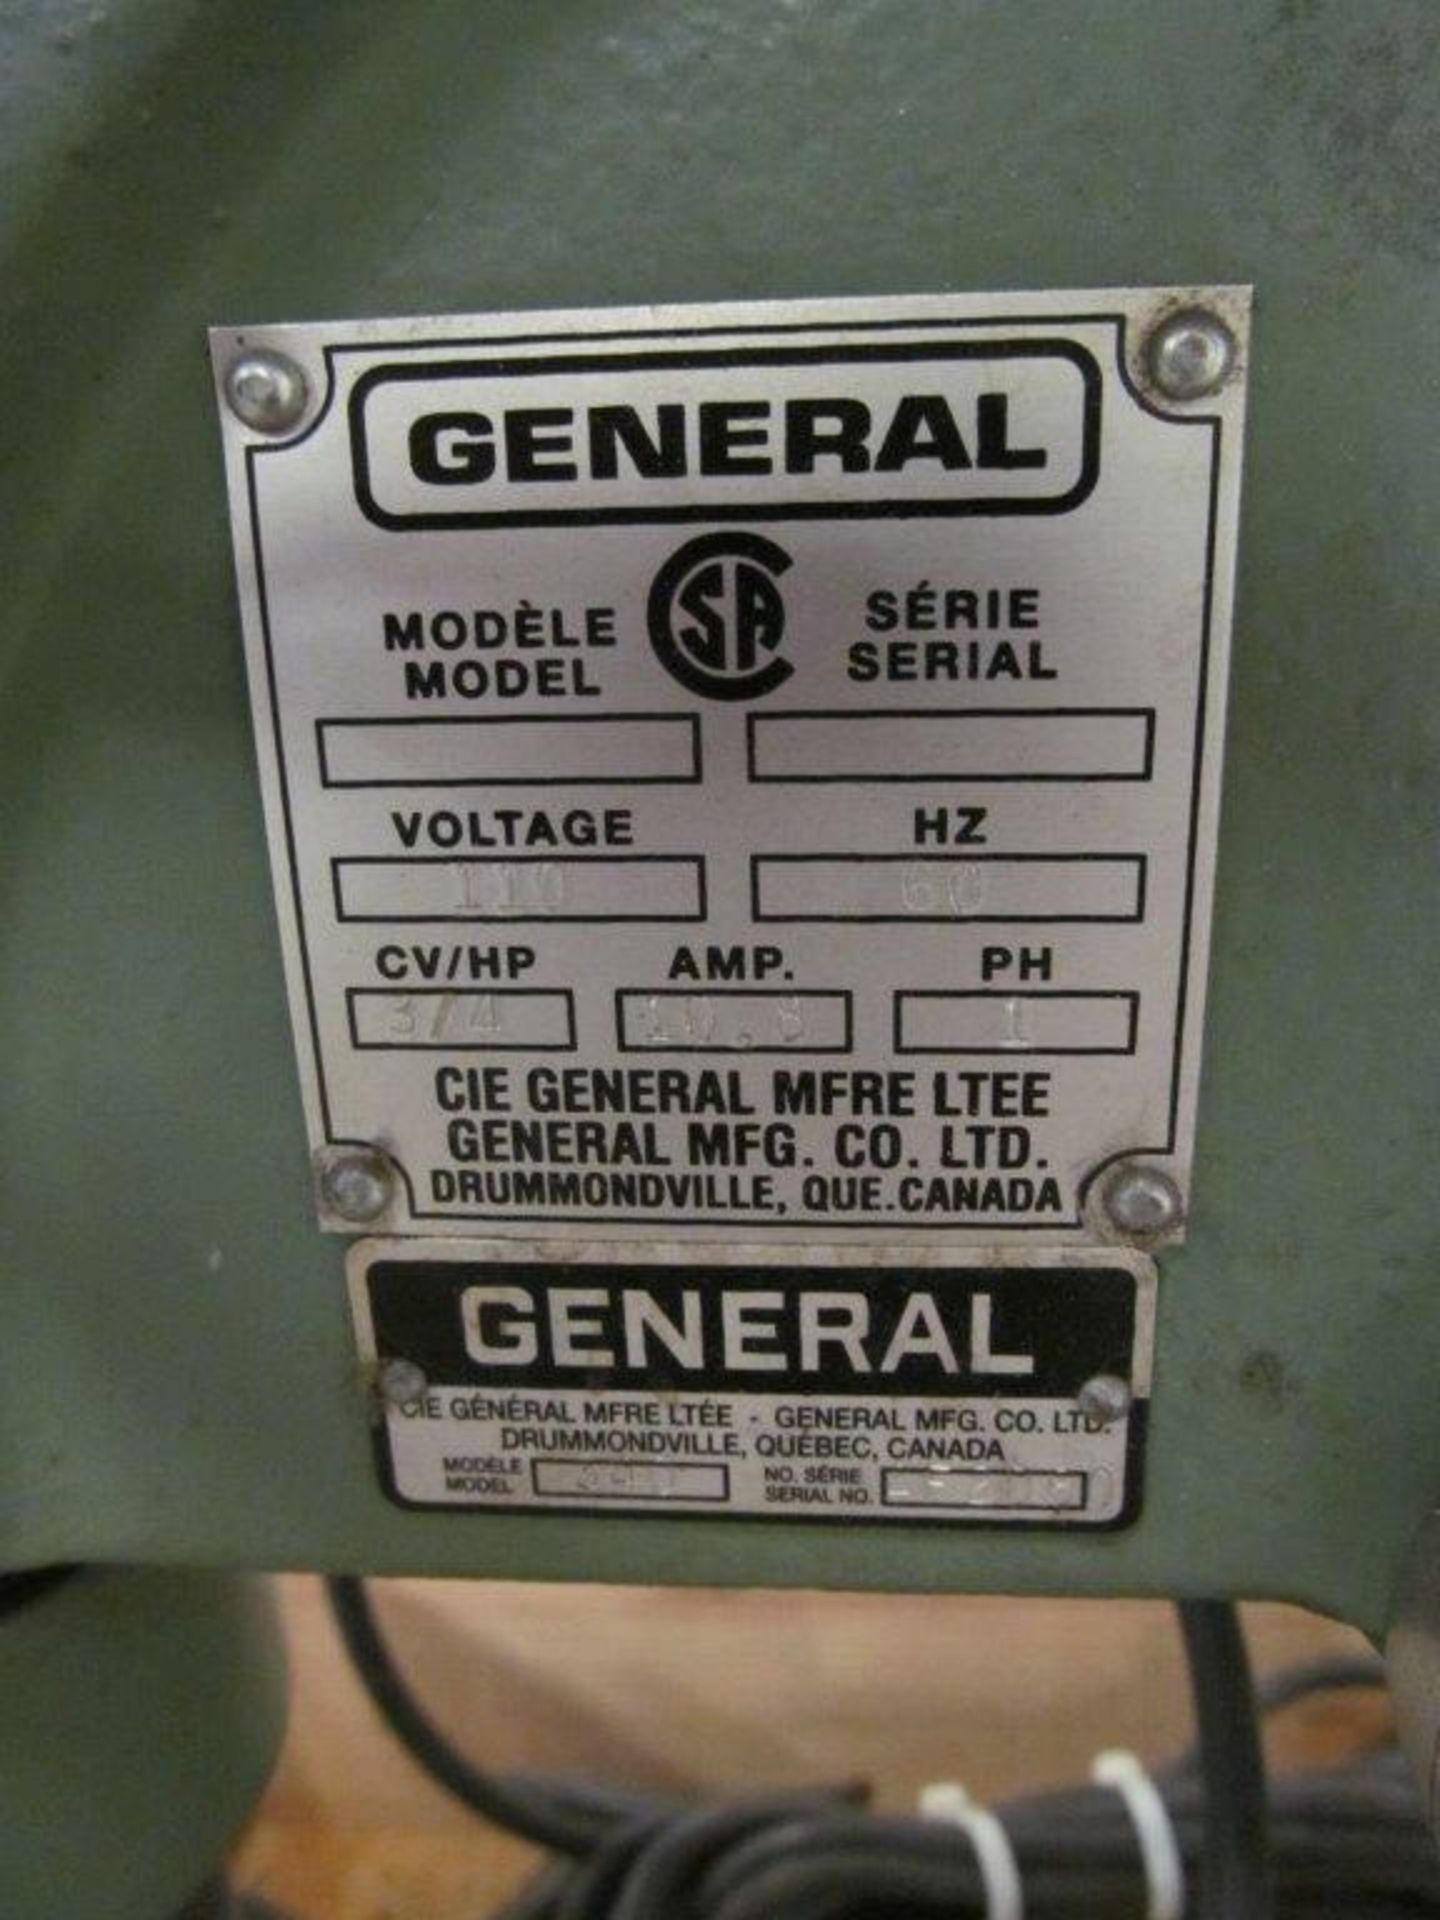 GENERAL DRILL PRESS, MODEL 340, S/N AF2060 (MISSING MOTOR) - LOCATION - HAWKESBURY, ONTARIO - Image 2 of 2